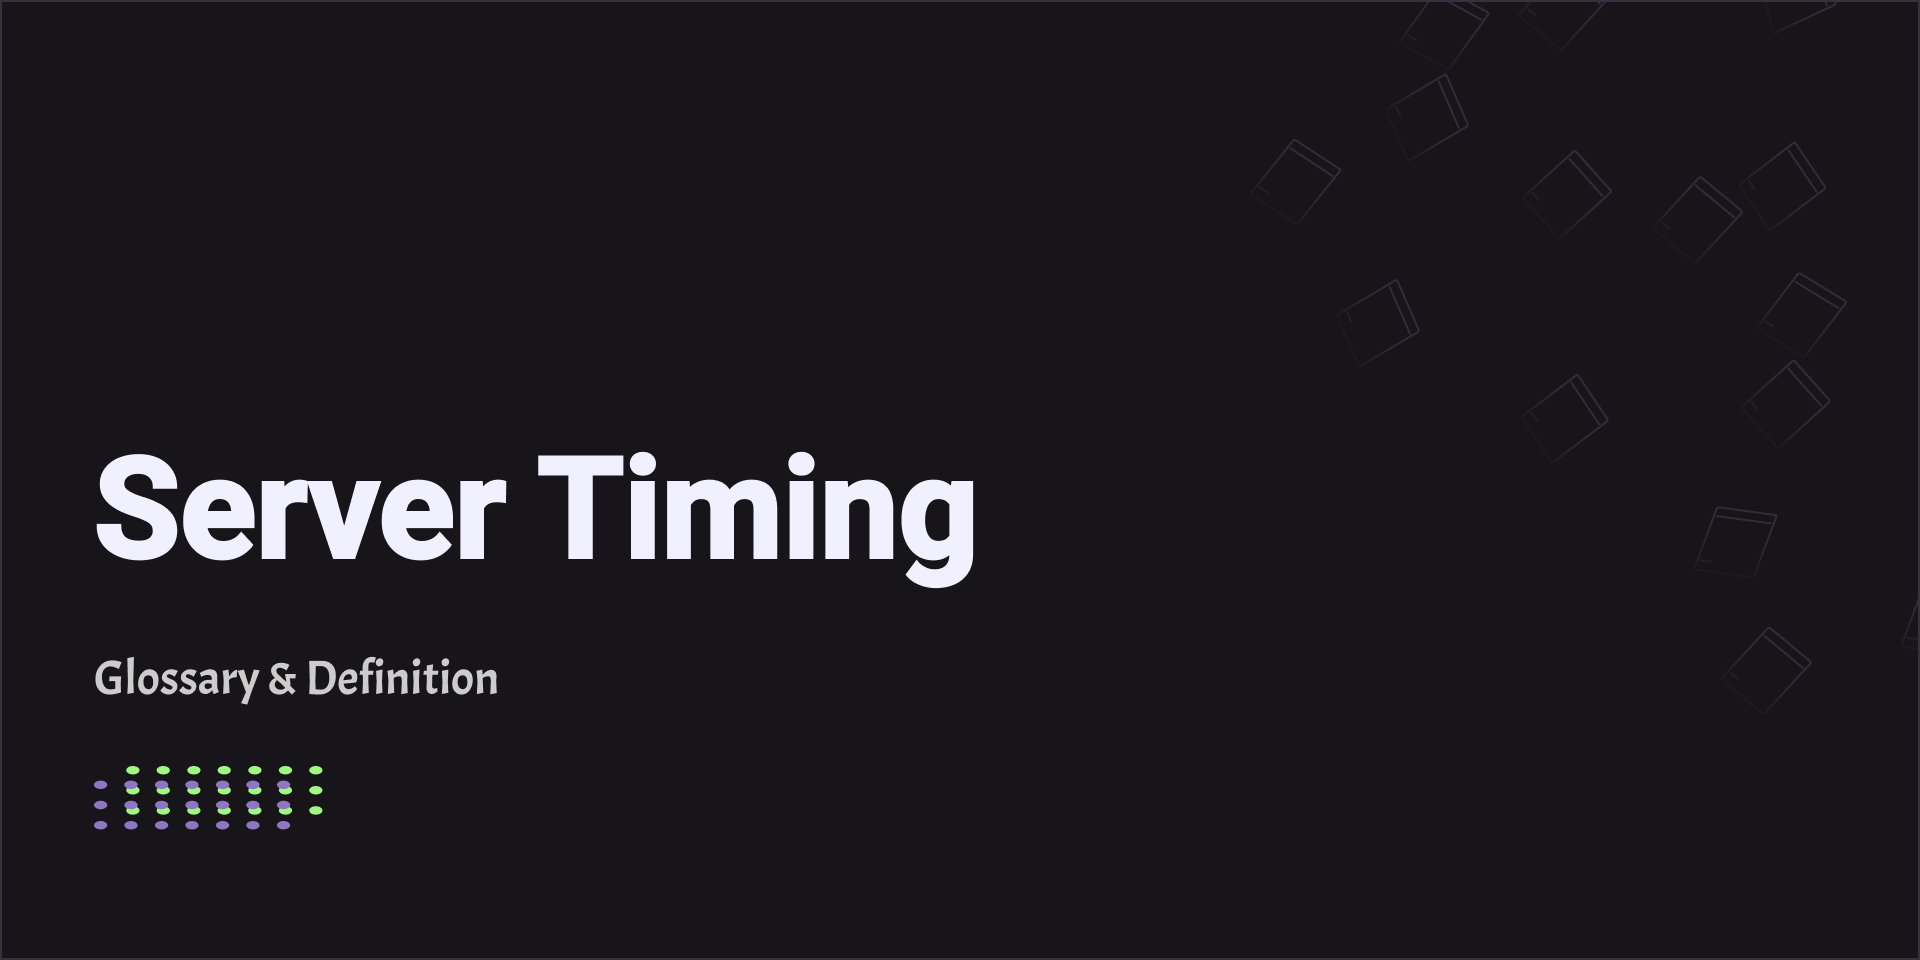 Server Timing